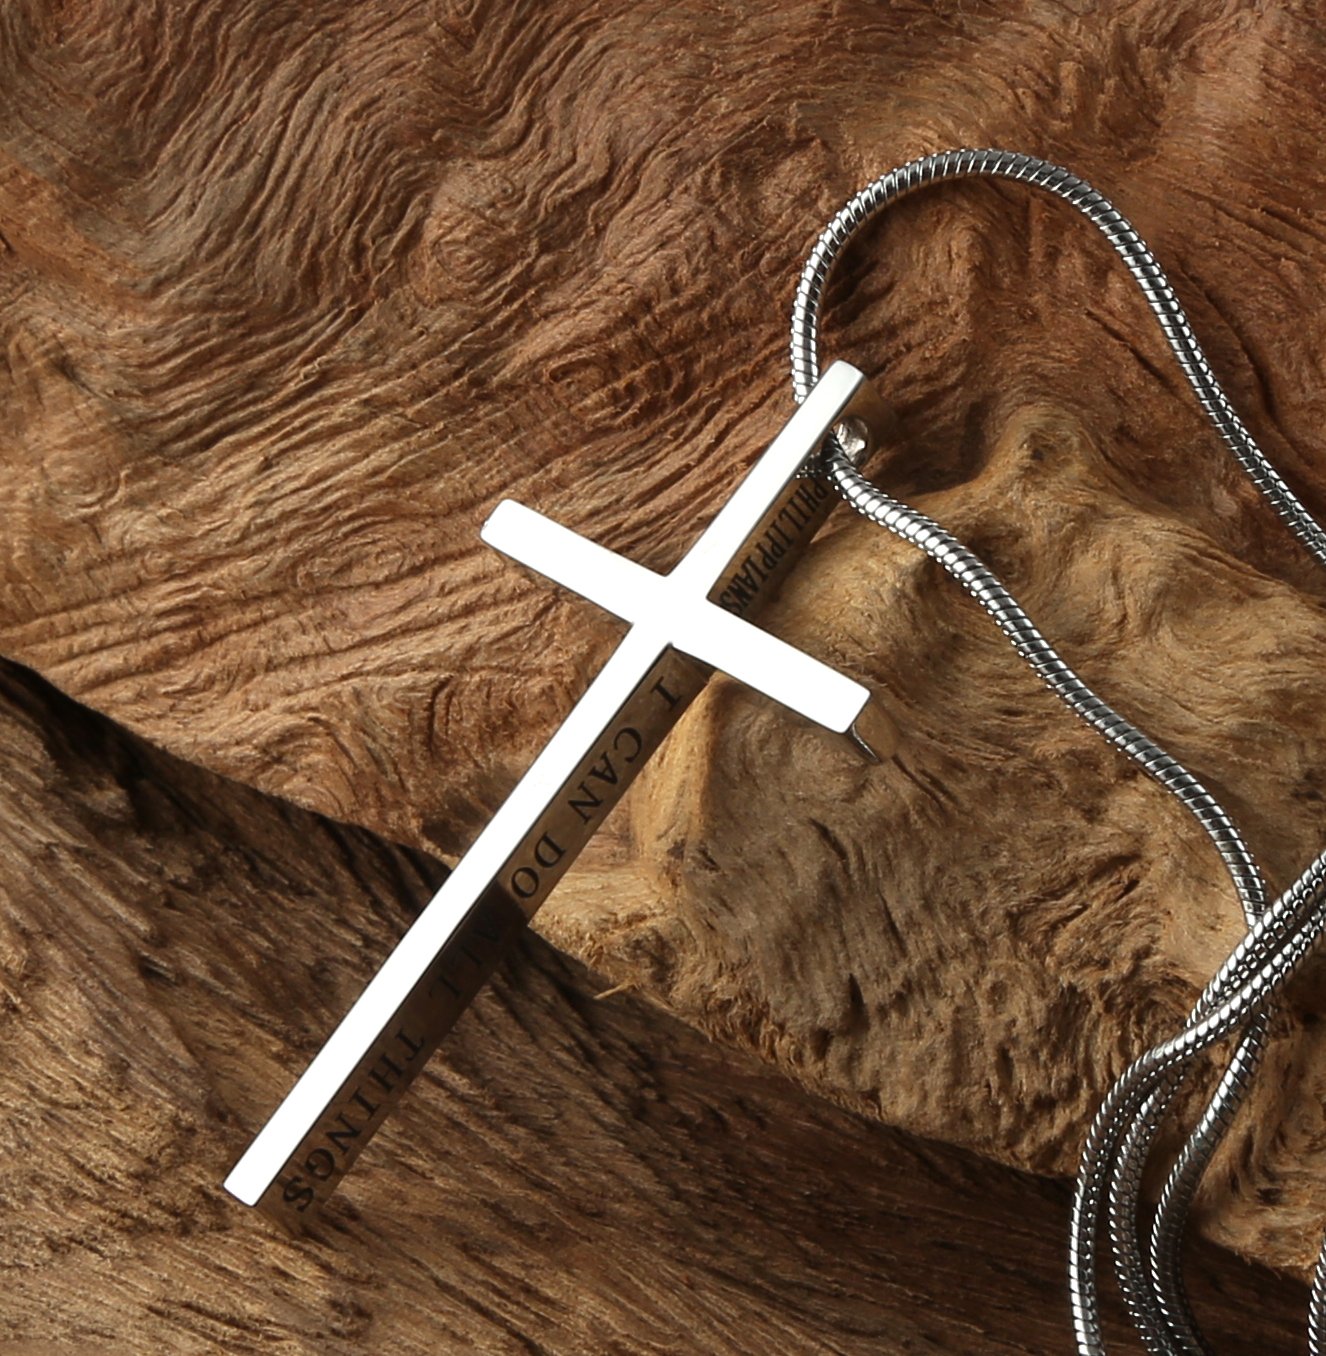 HZMAN Philippians 4:13 Cross Pendant STRENGTH Bible Verse Stainless Steel Necklace